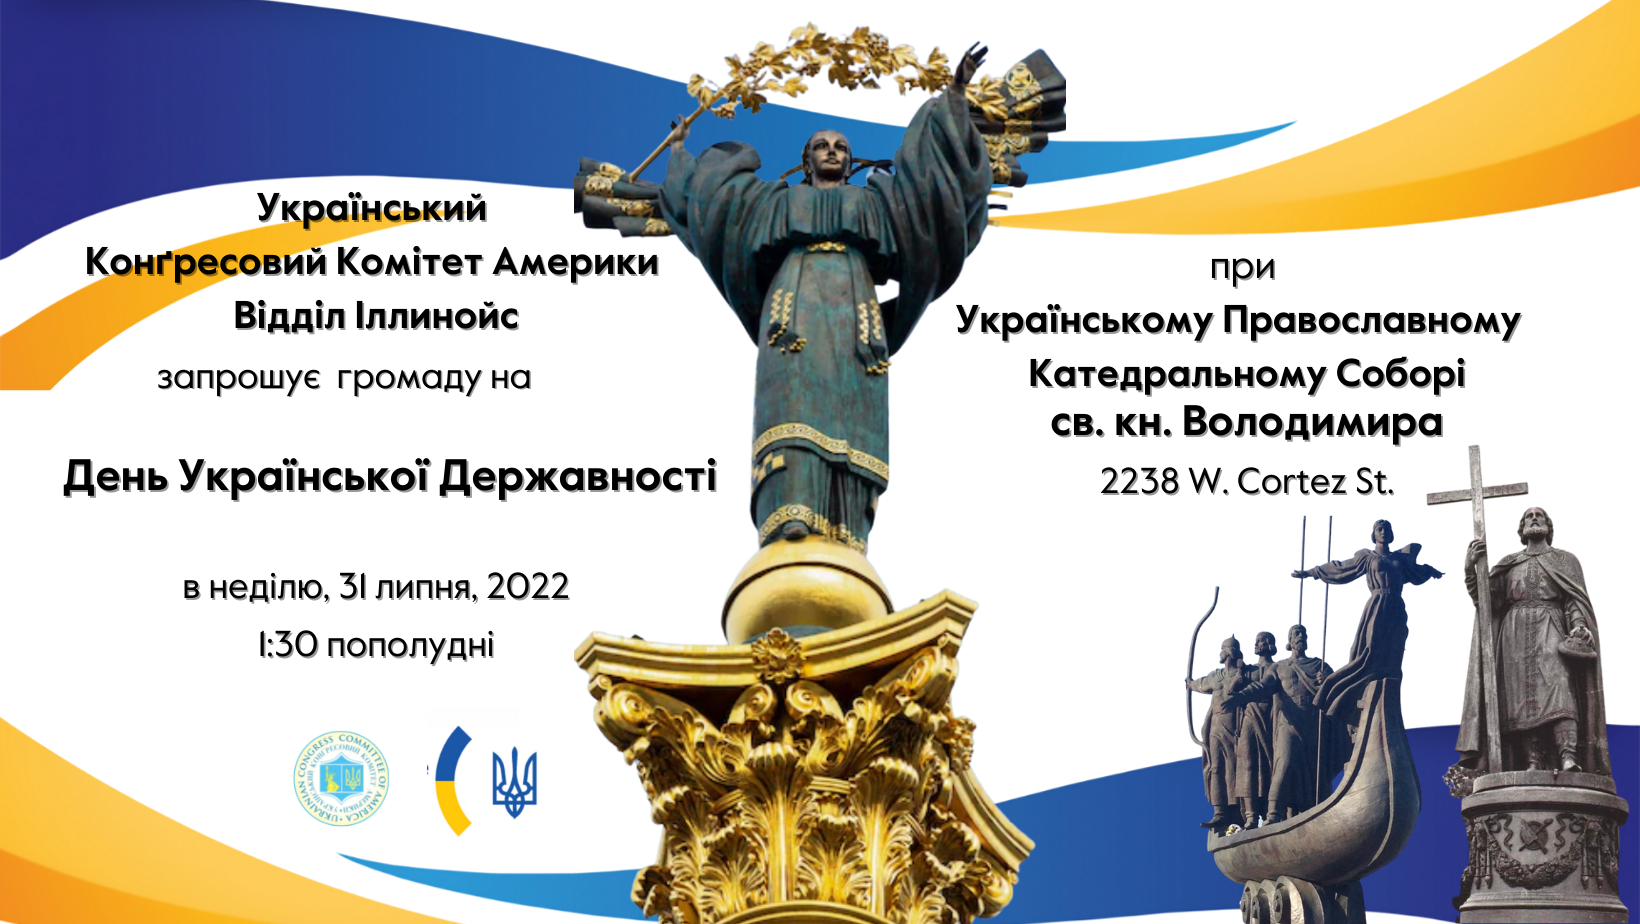 Featured image for “Statehood Day of Ukraine-День Української Державності”